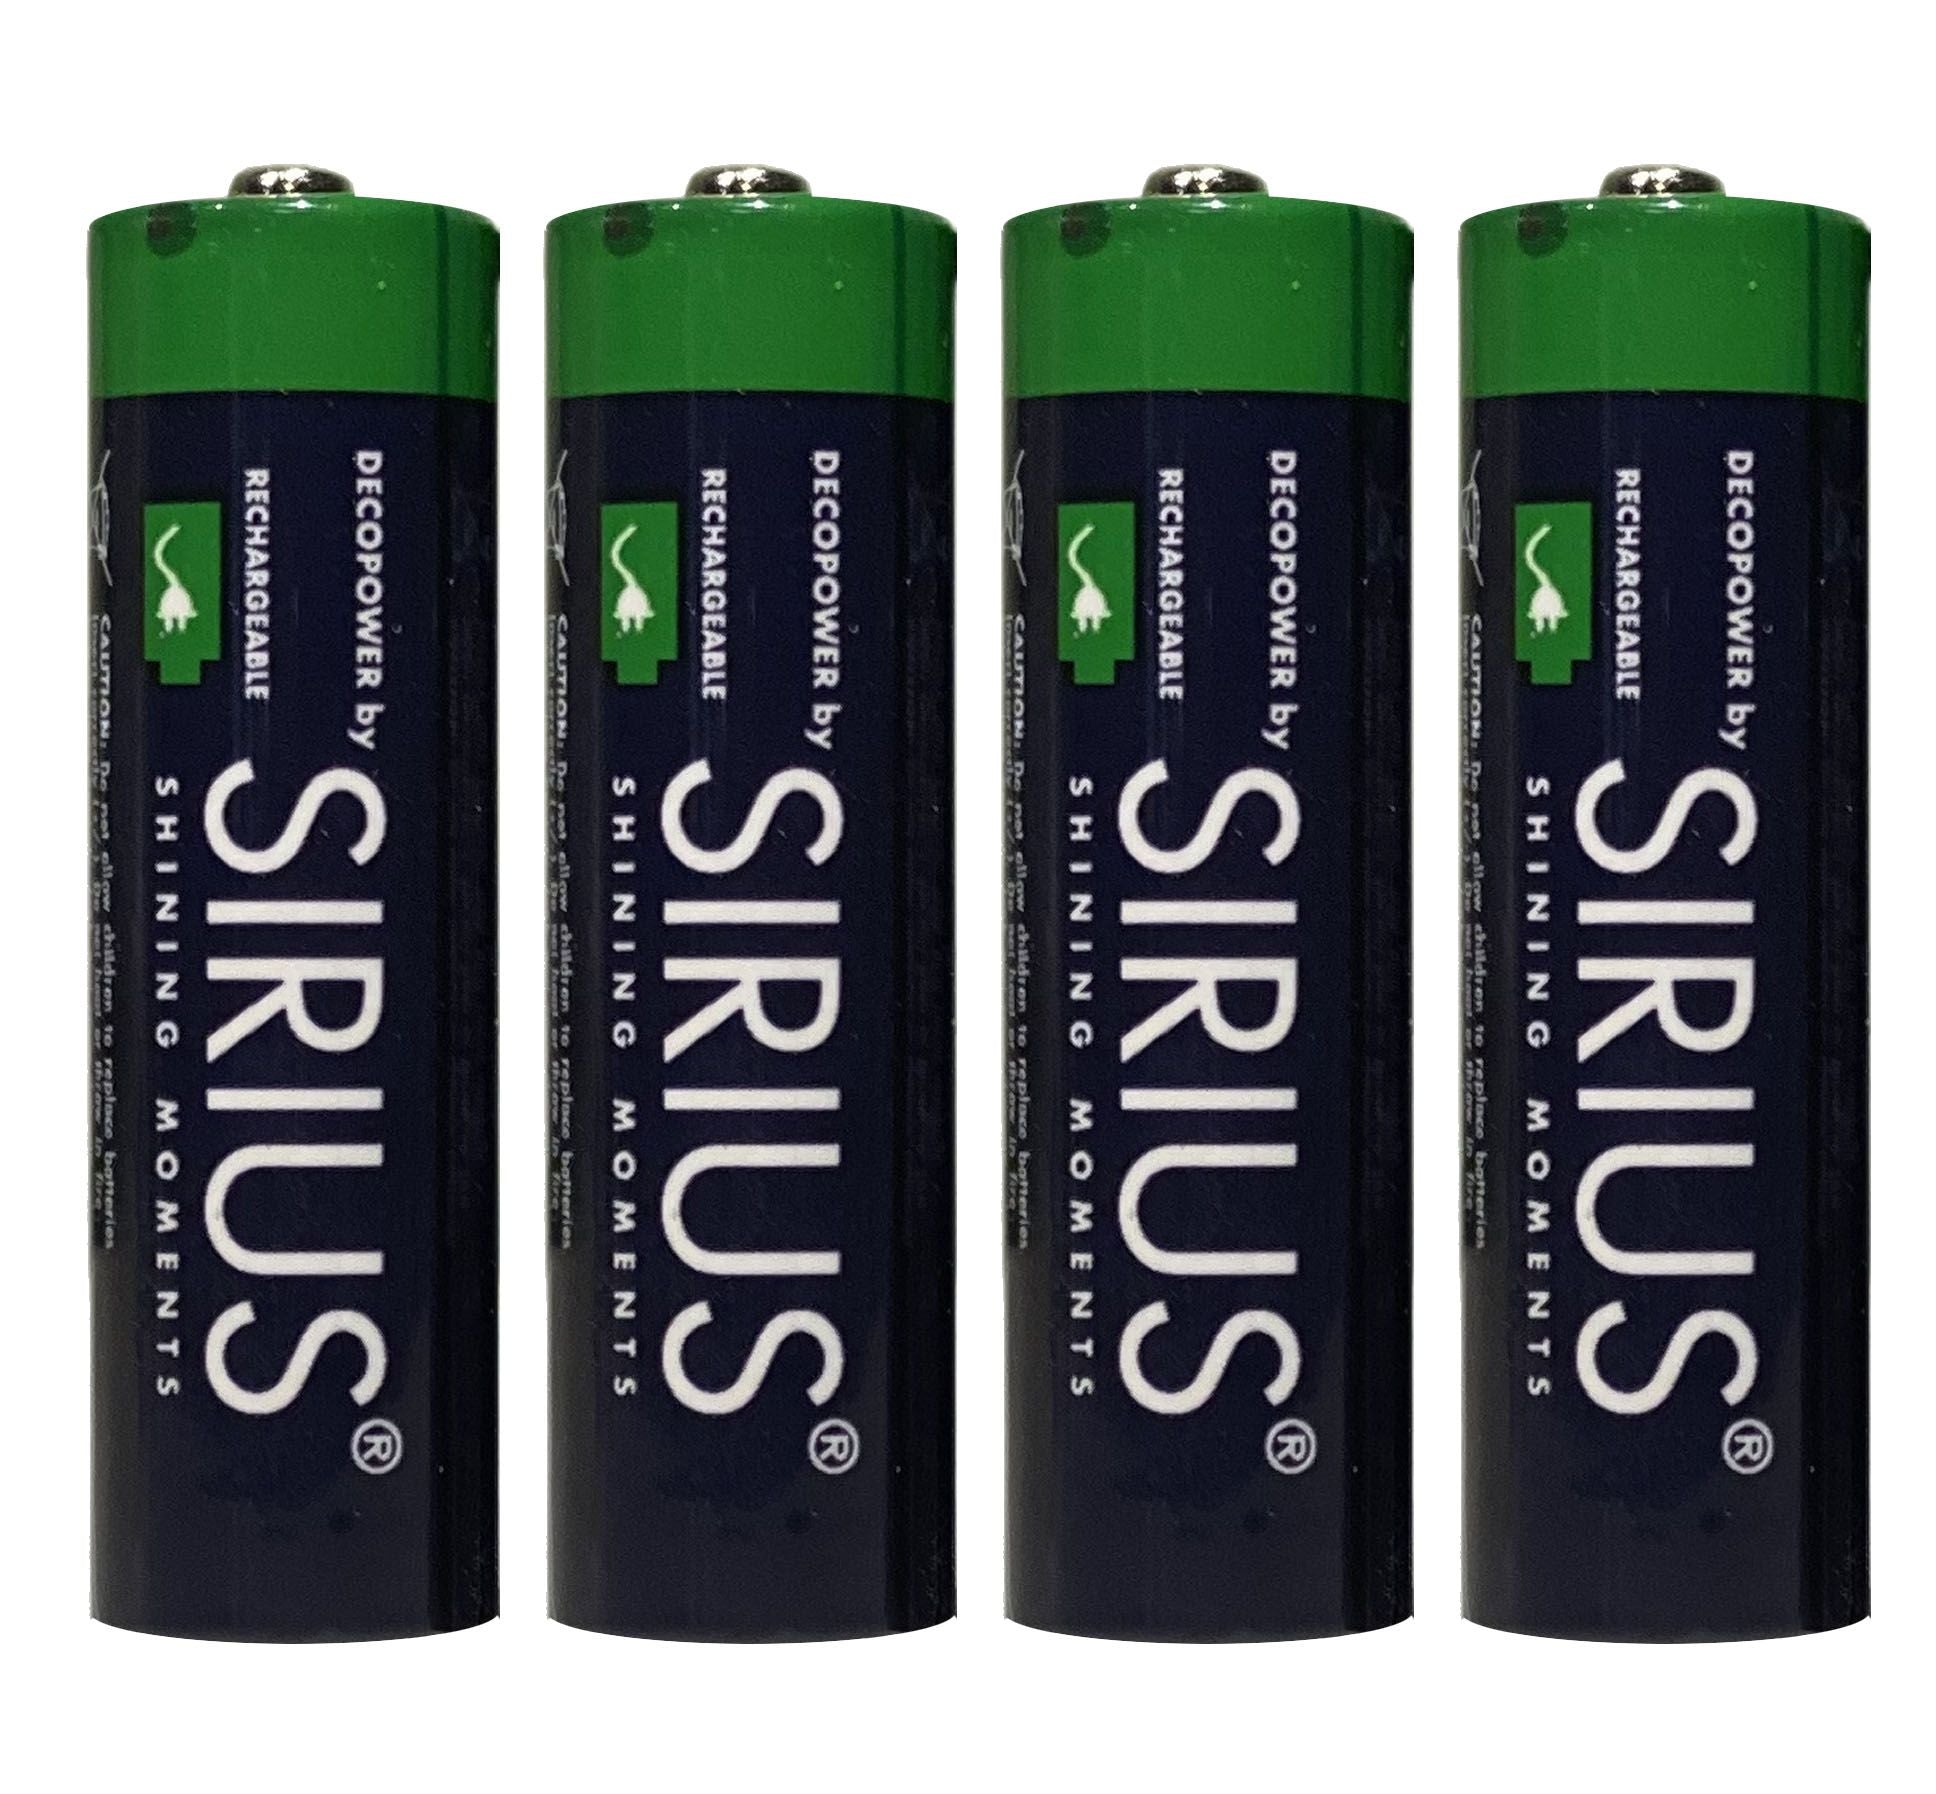 Sirius Deco Power AA Batteries rechargeables, 4 PCS Set